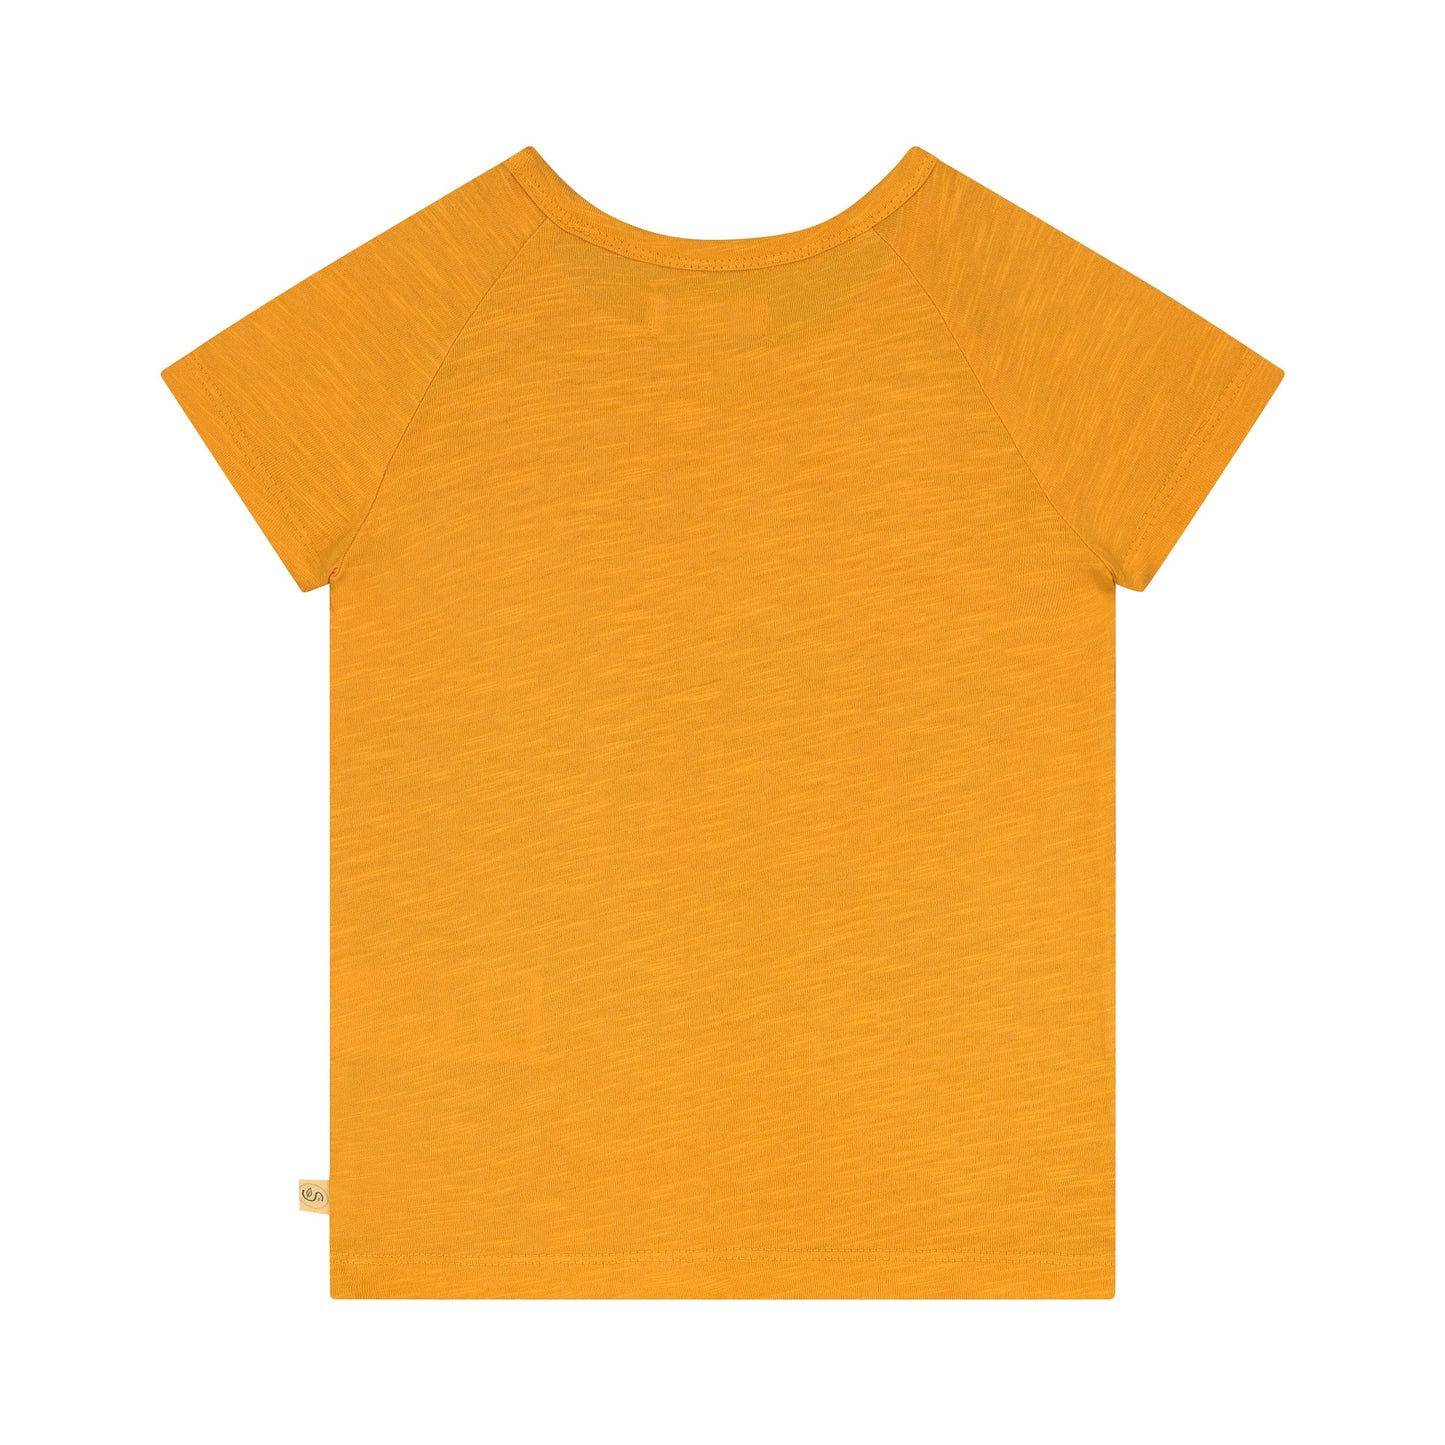 Safari big five short sleeve yellow T-shirt